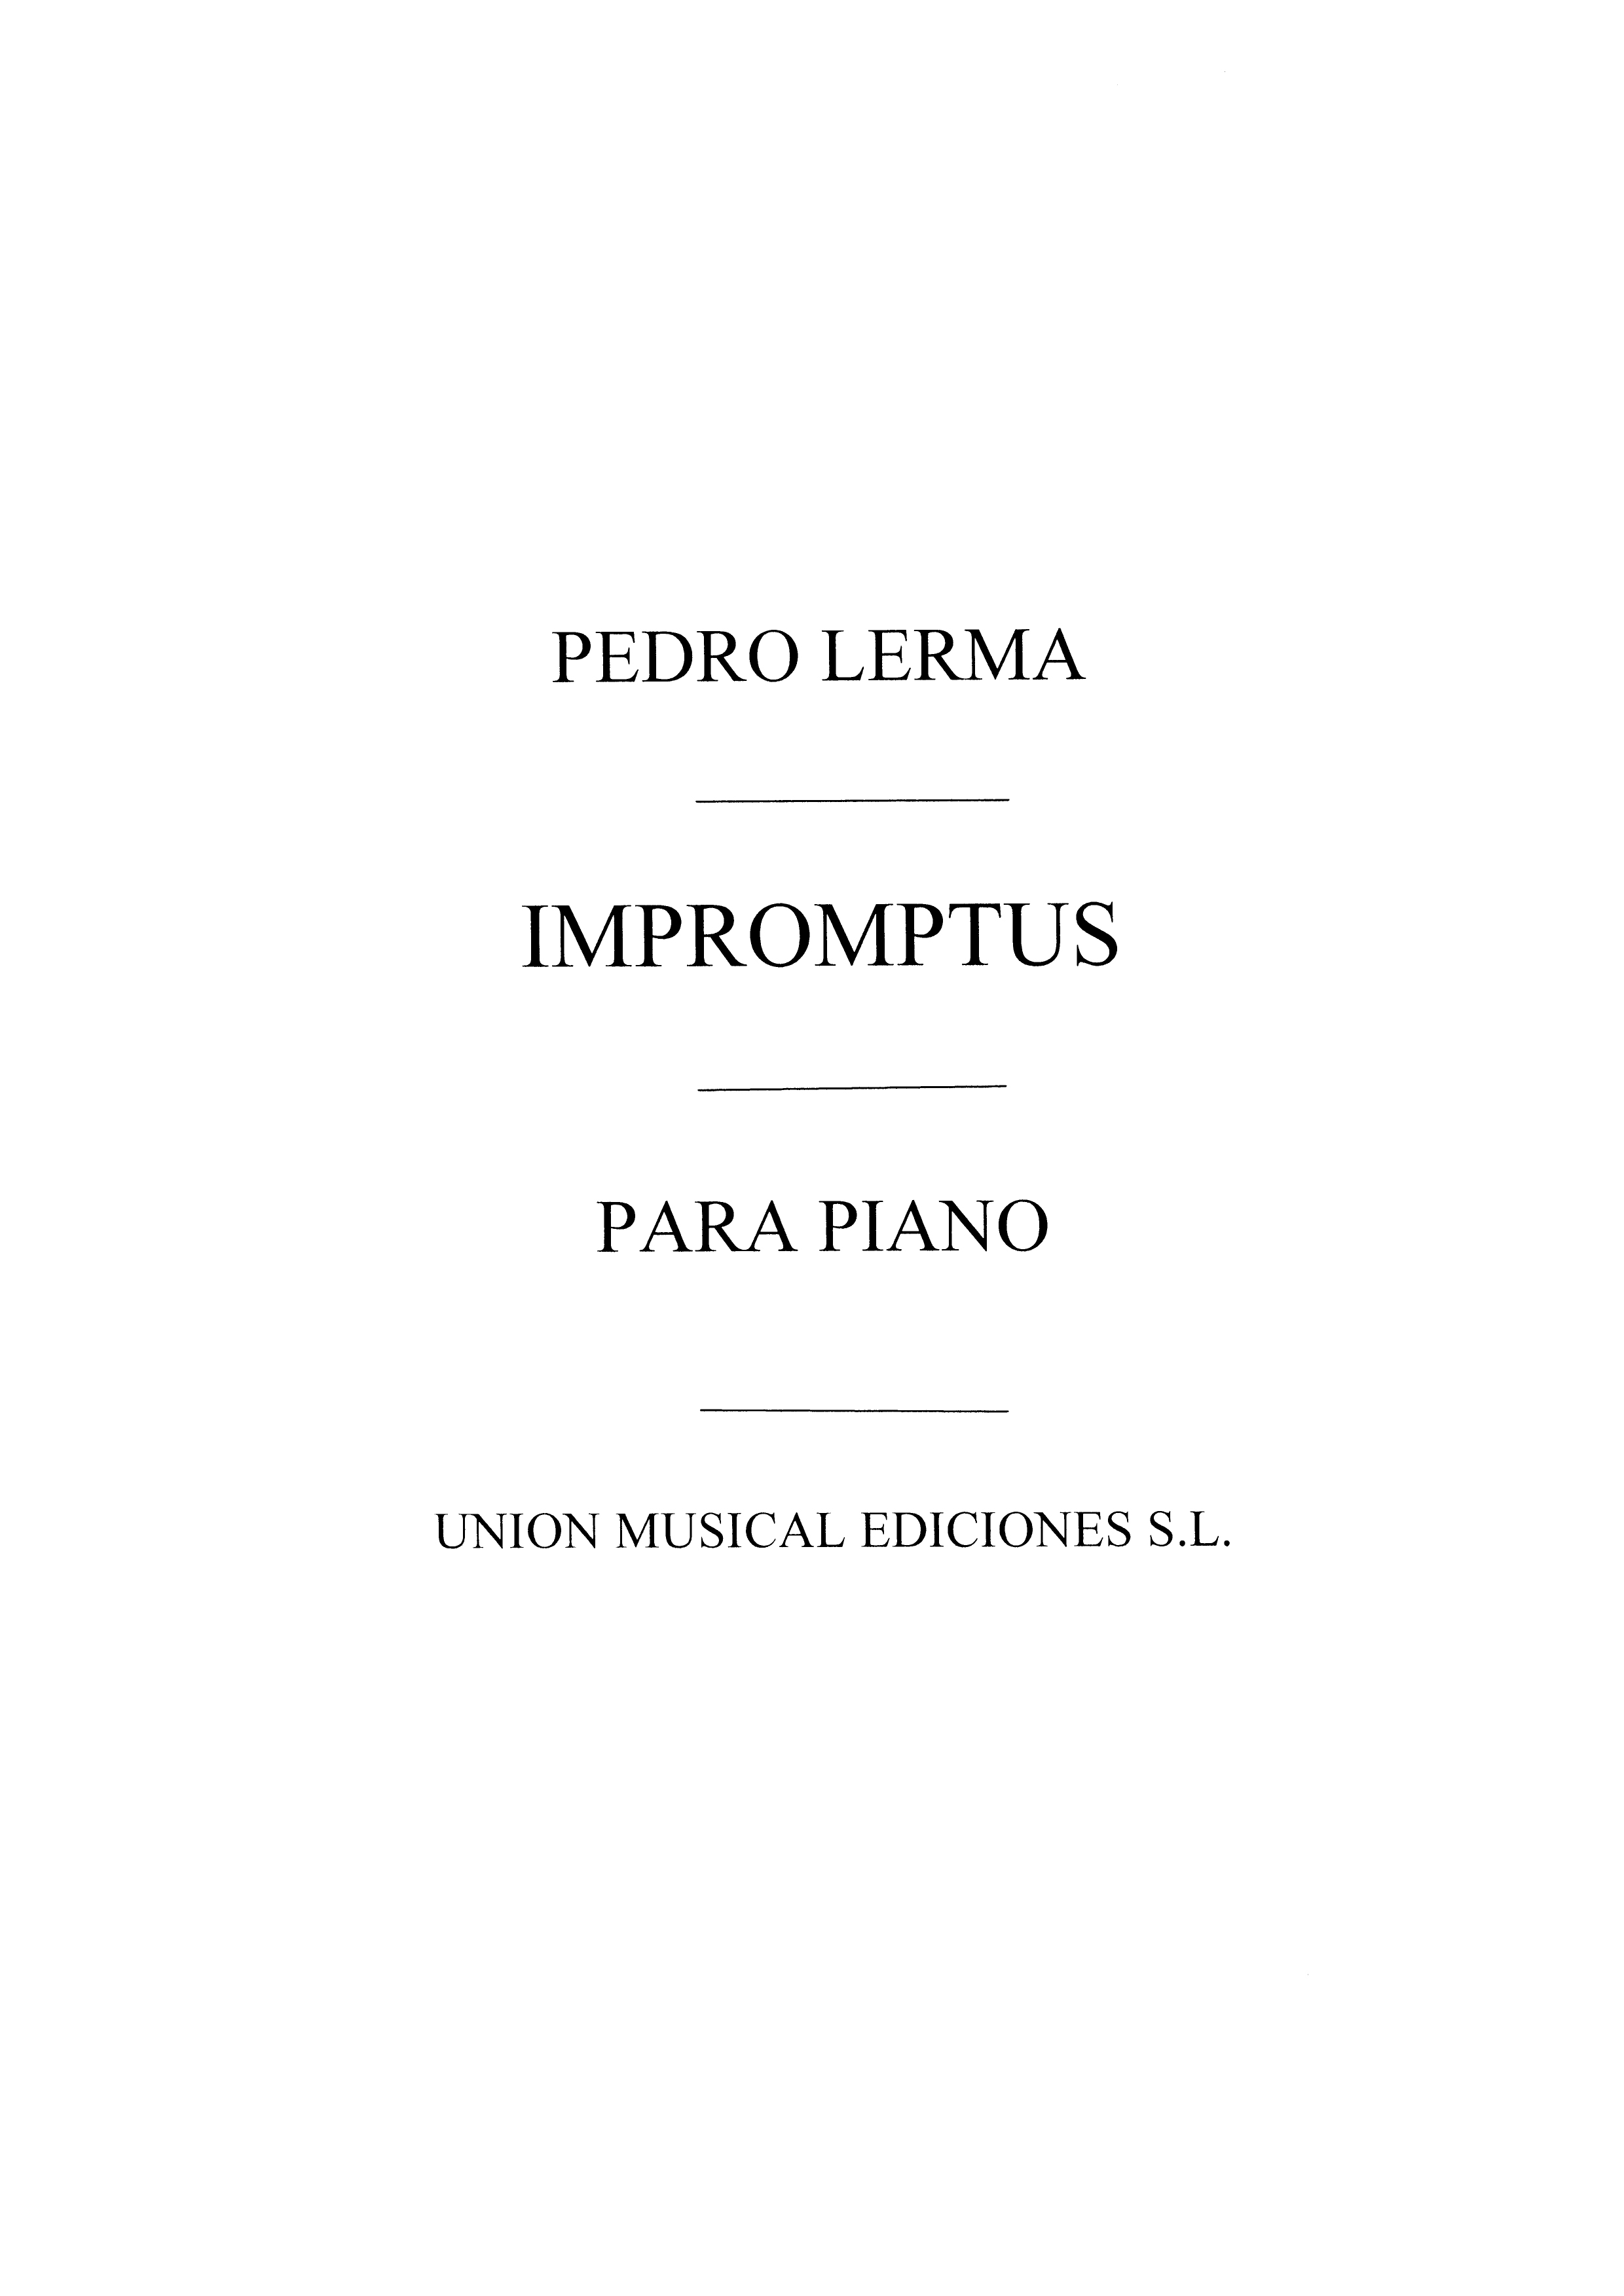 Pedro Lerma: Impromptus For Piano: Piano: Instrumental Work